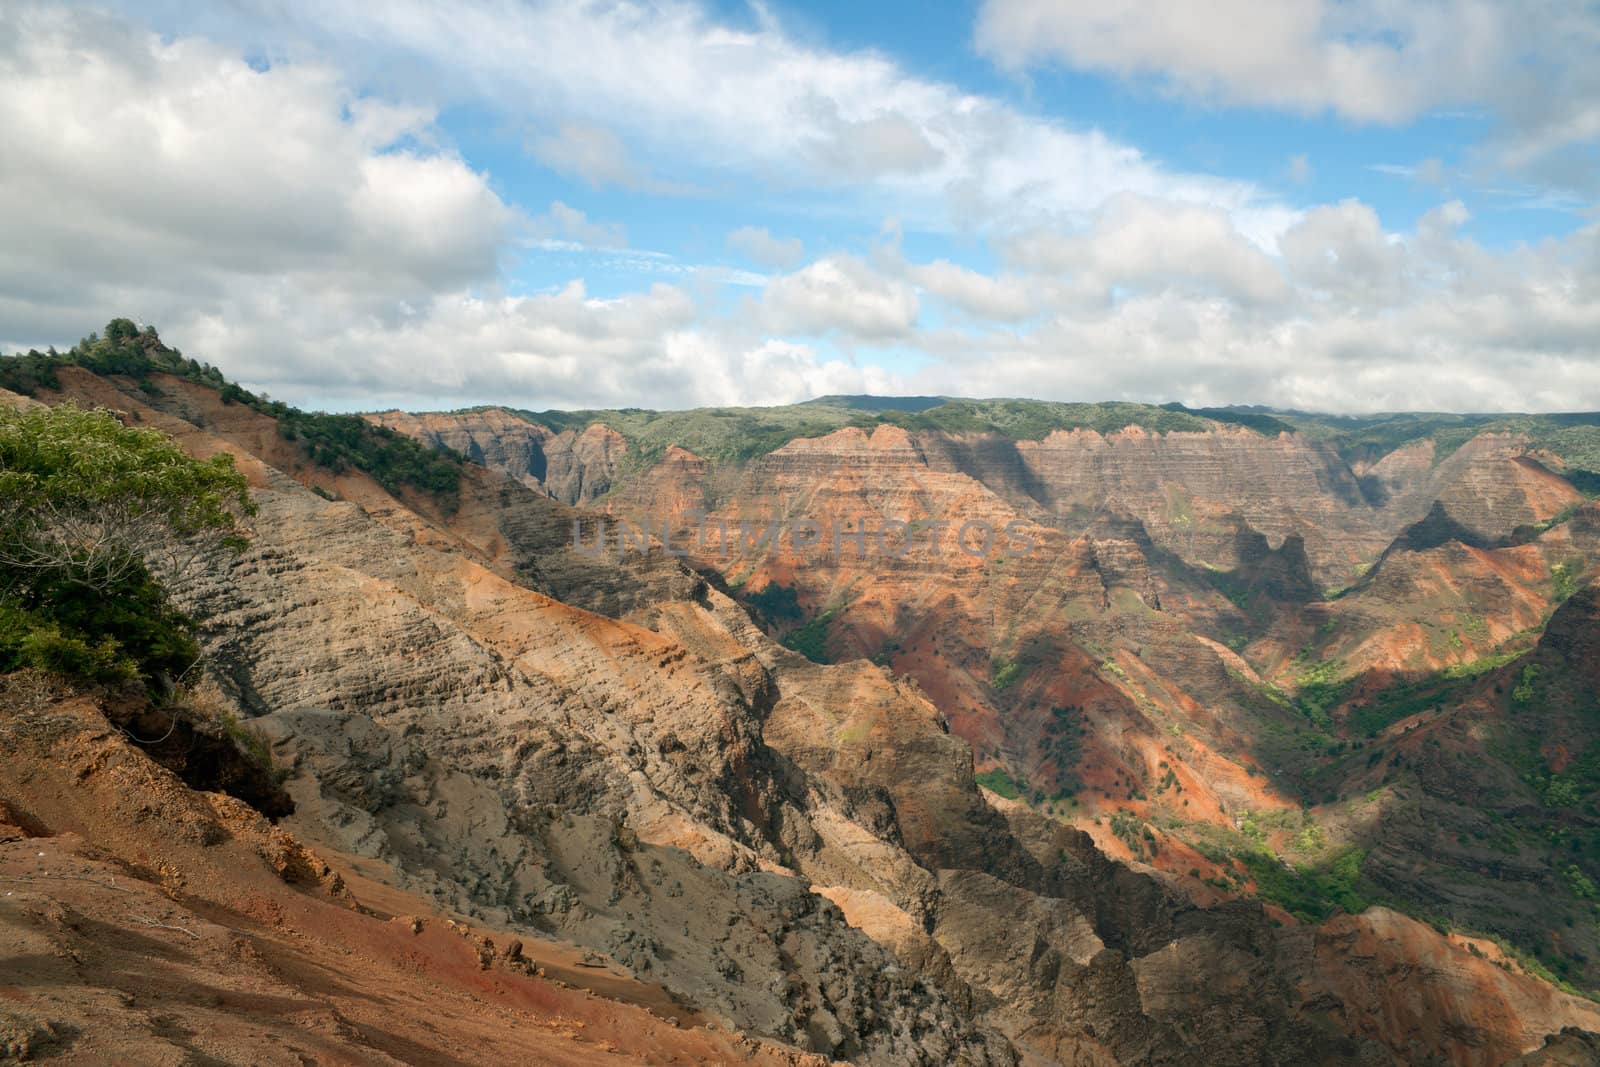 View into the Waimea Canyon on Kauai, Hawaii (the "Grand Canyon of the Pacific")
